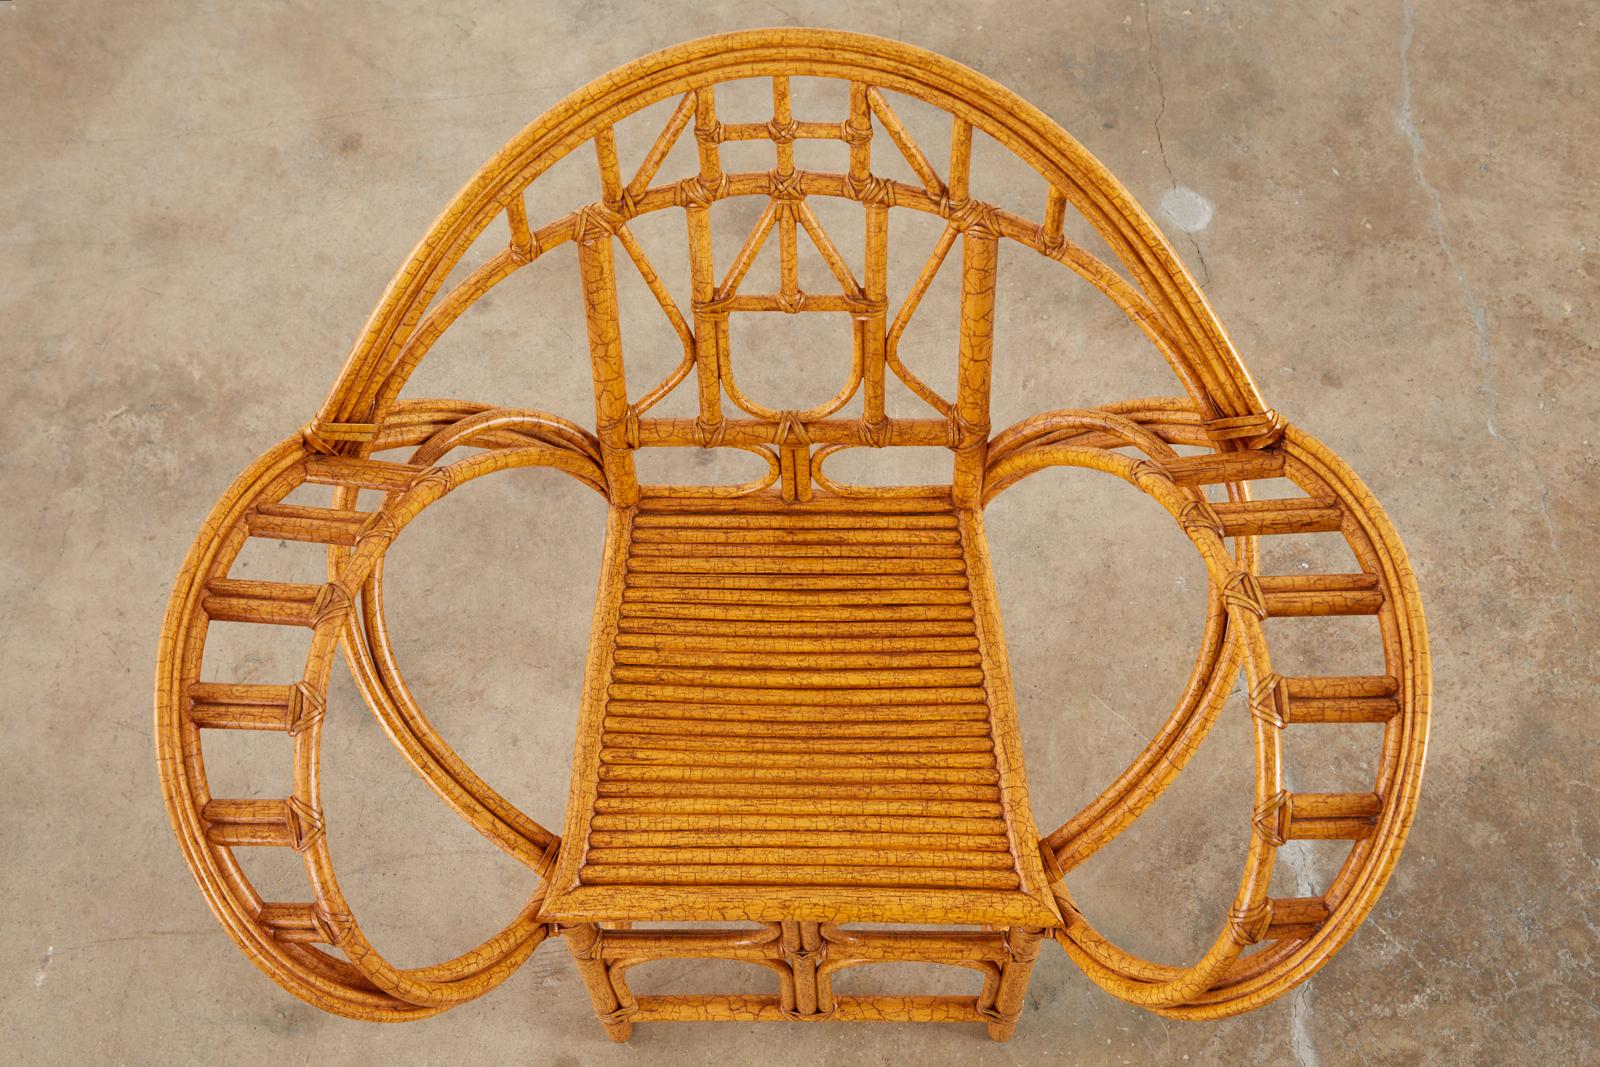 wicker butterfly chair -china -b2b -forum -blog -wikipedia -.cn -.gov -alibaba